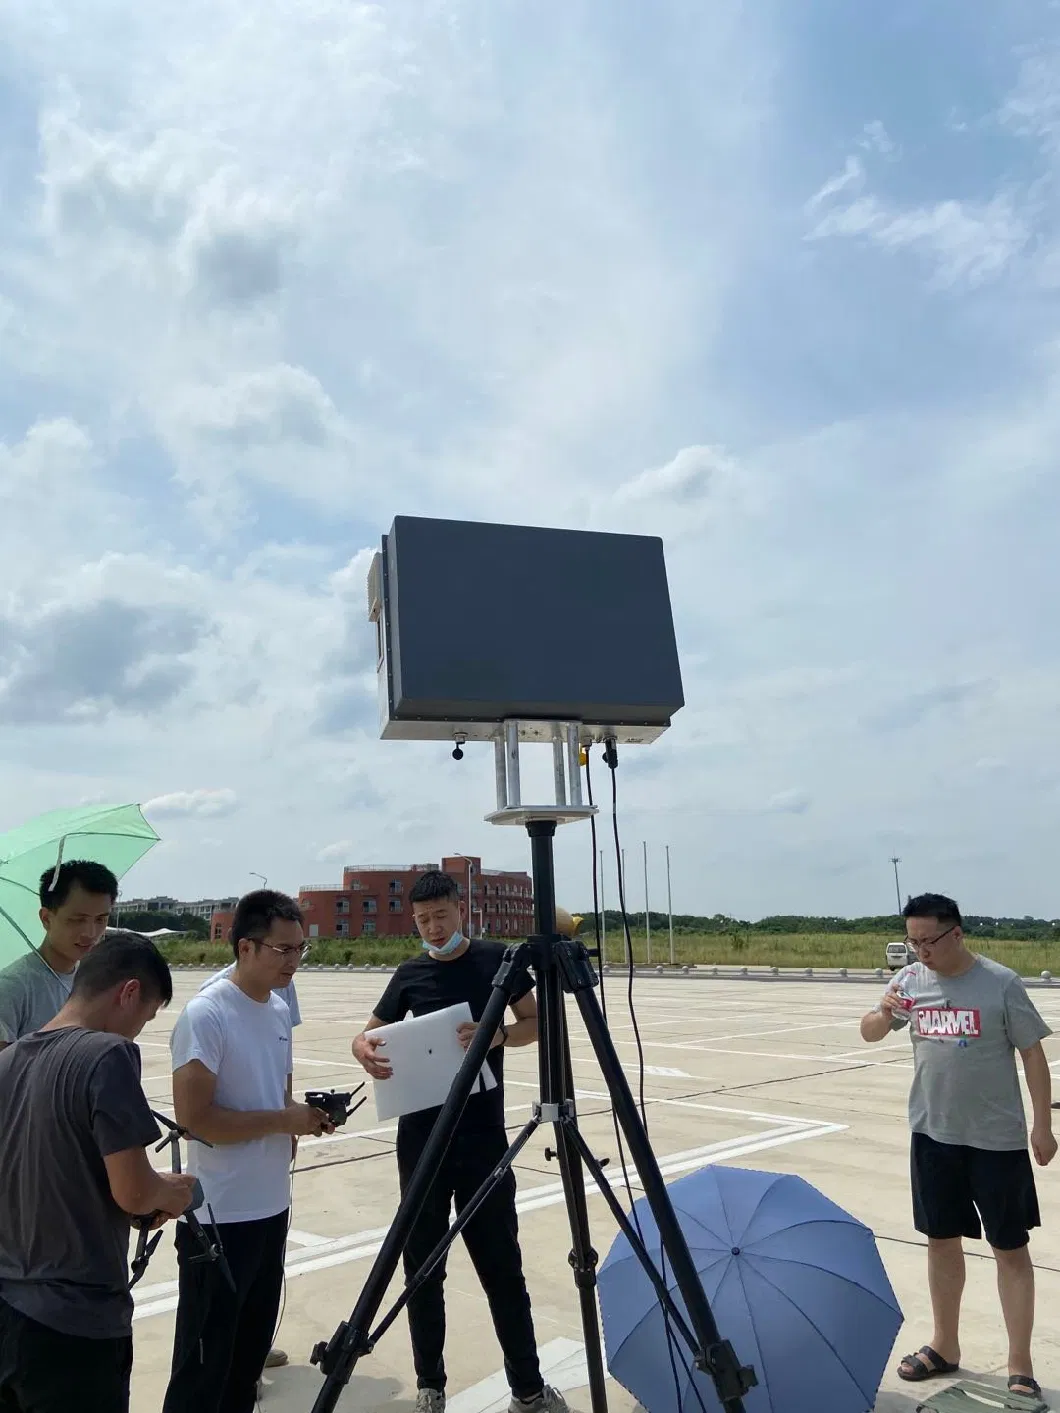 S Band Coordinates Ground Guard Radar Detector